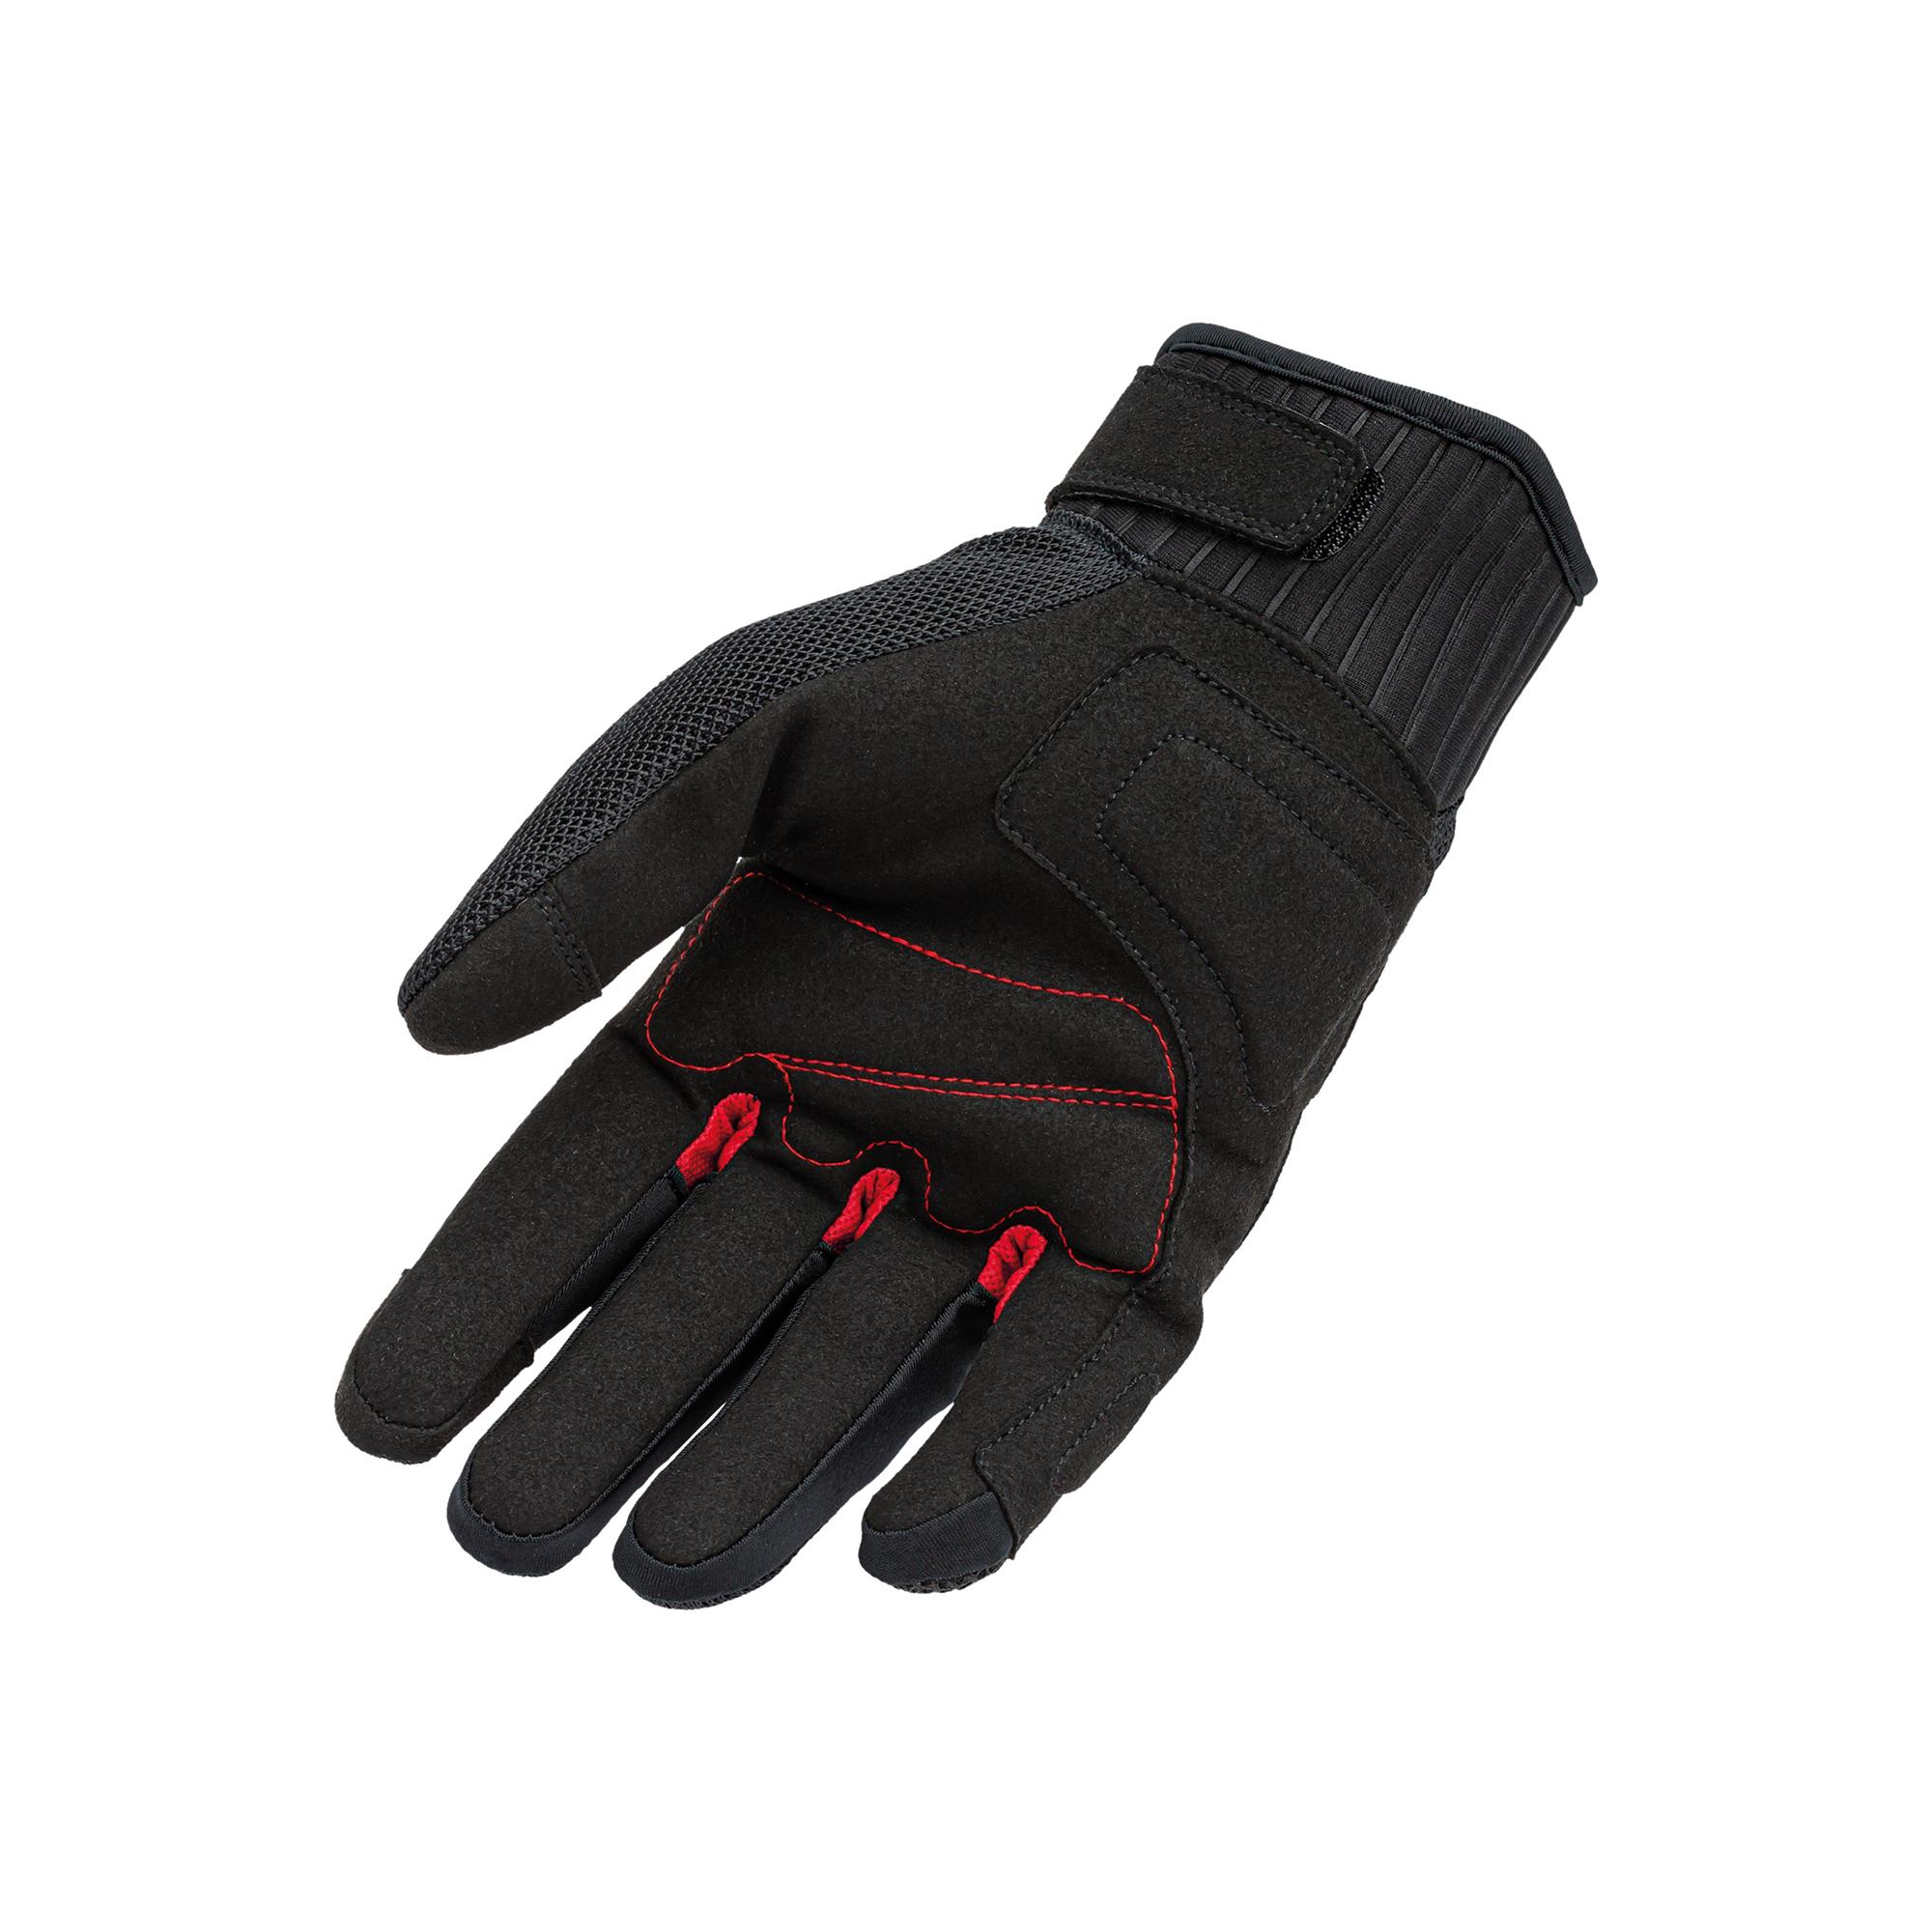 Penna Mesh Gloves Black–Red 